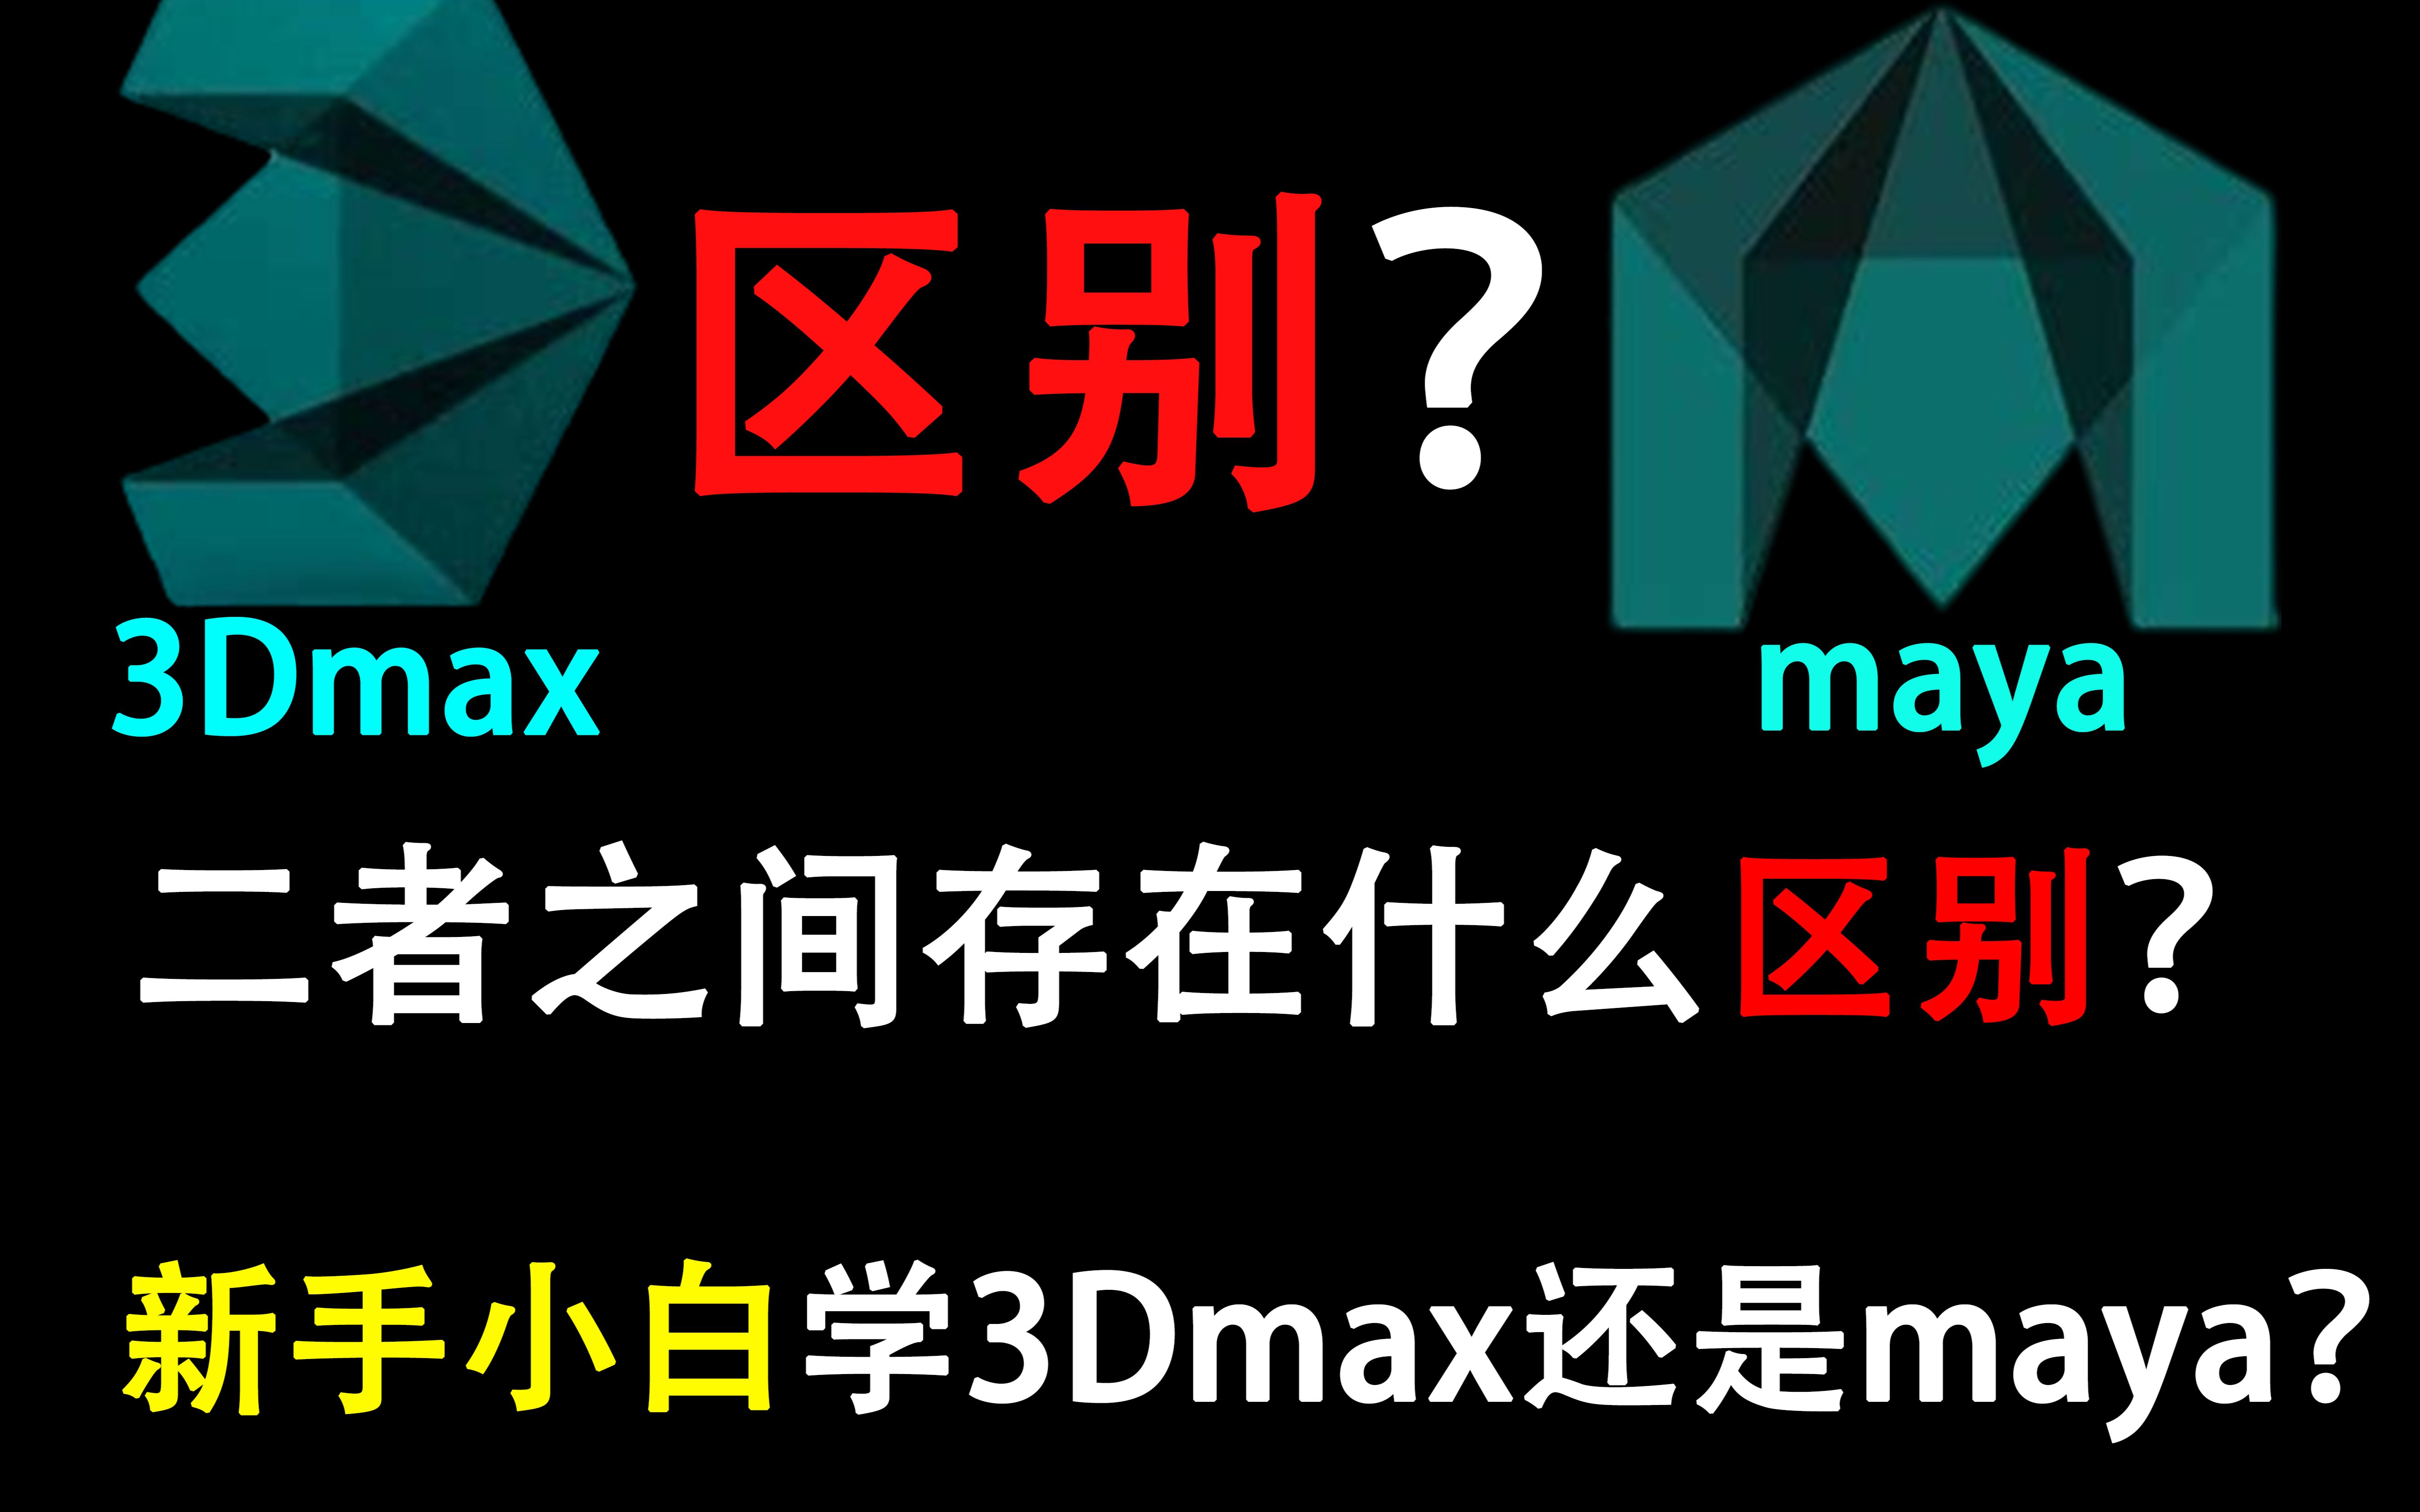 3Dmax和maya有什么区别？新手小白该学哪个好？今天就给你们讲明白